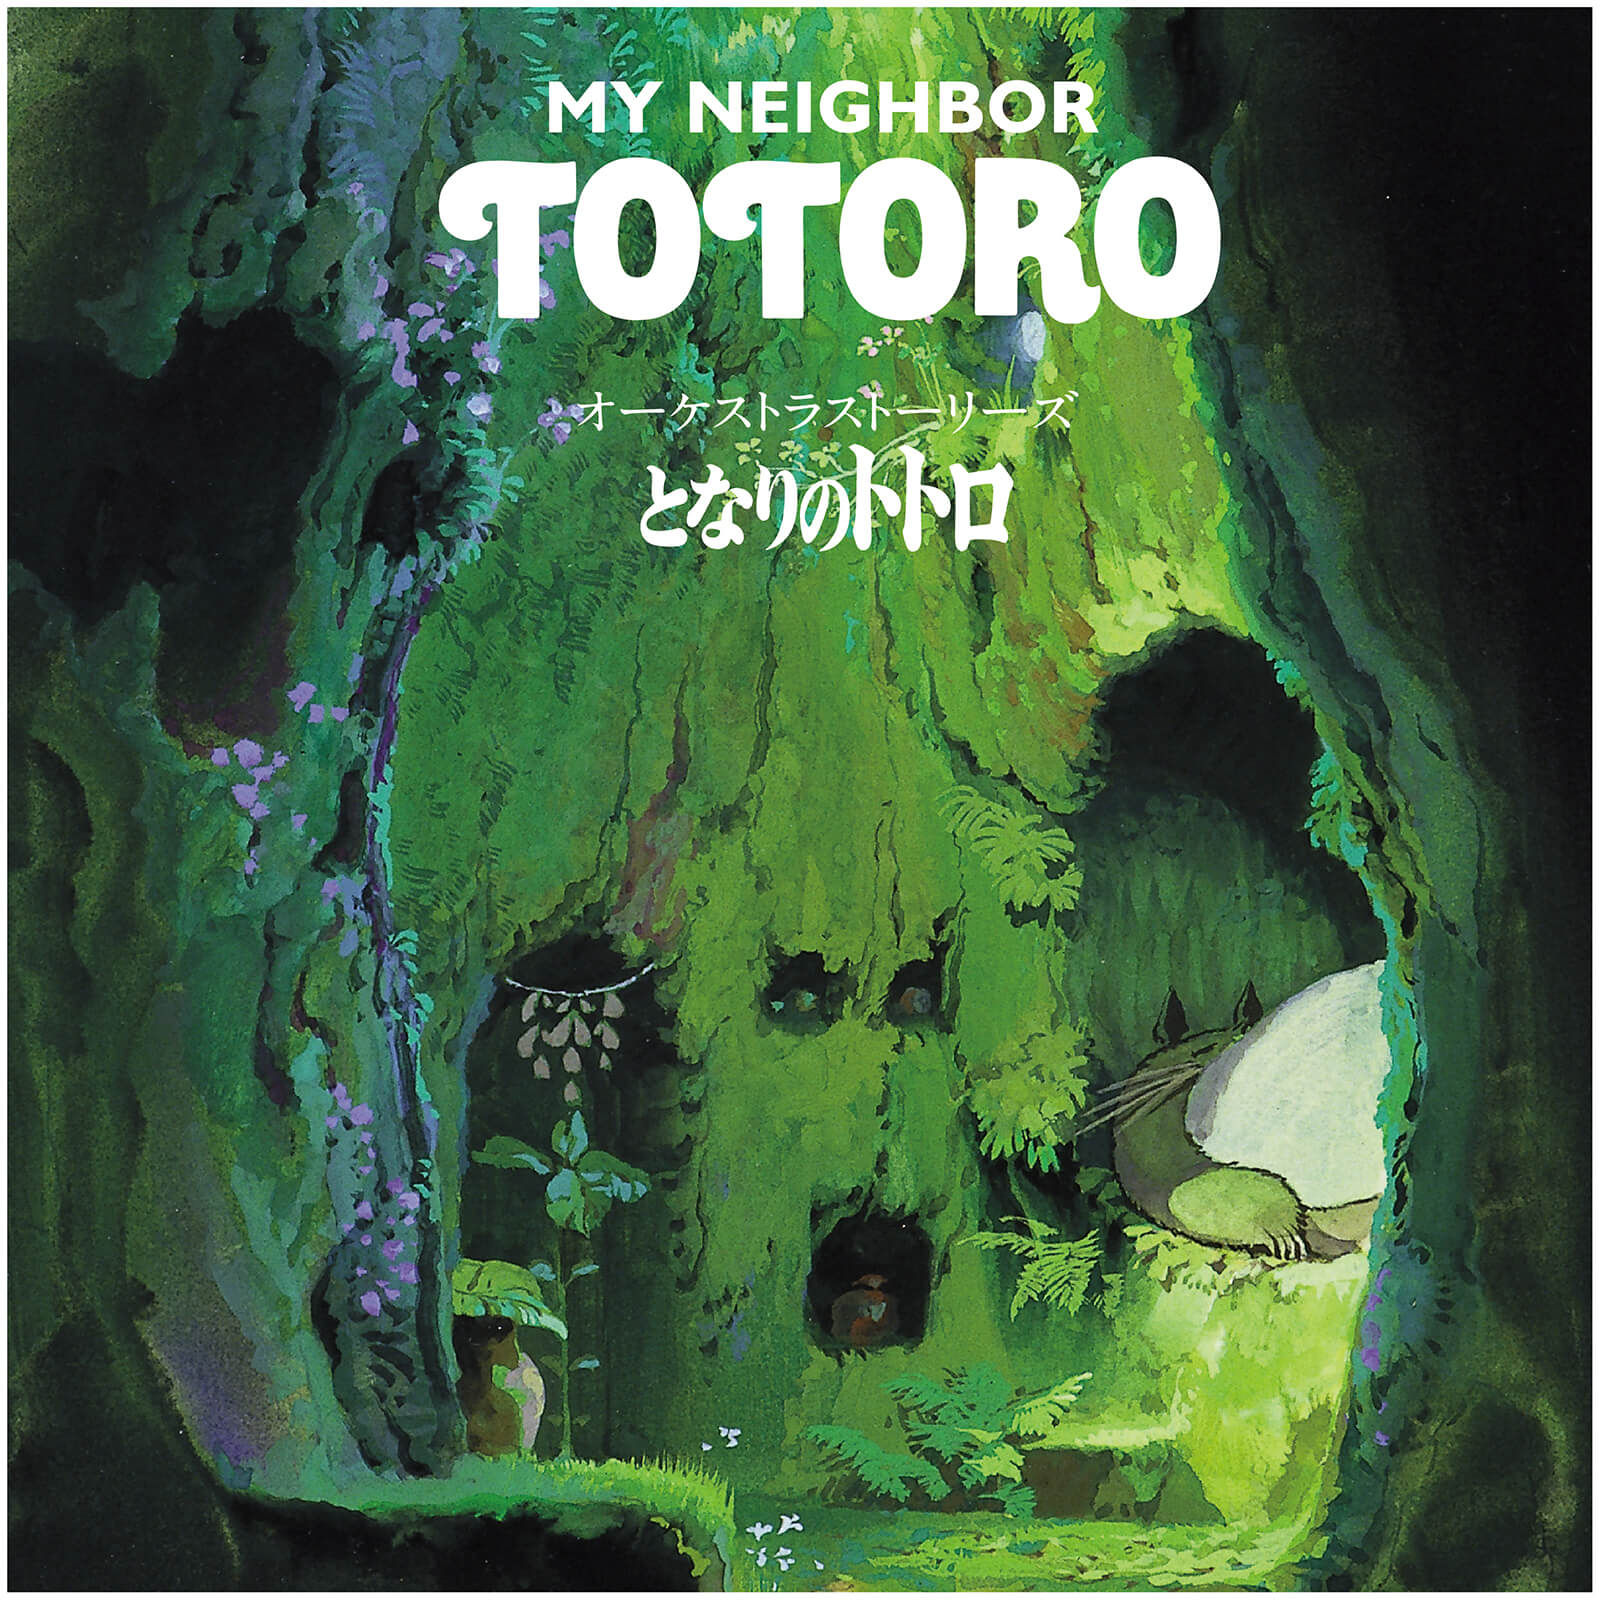 Studio Ghibli Orchestra Stories: My Neighbor Totoro Vinyl